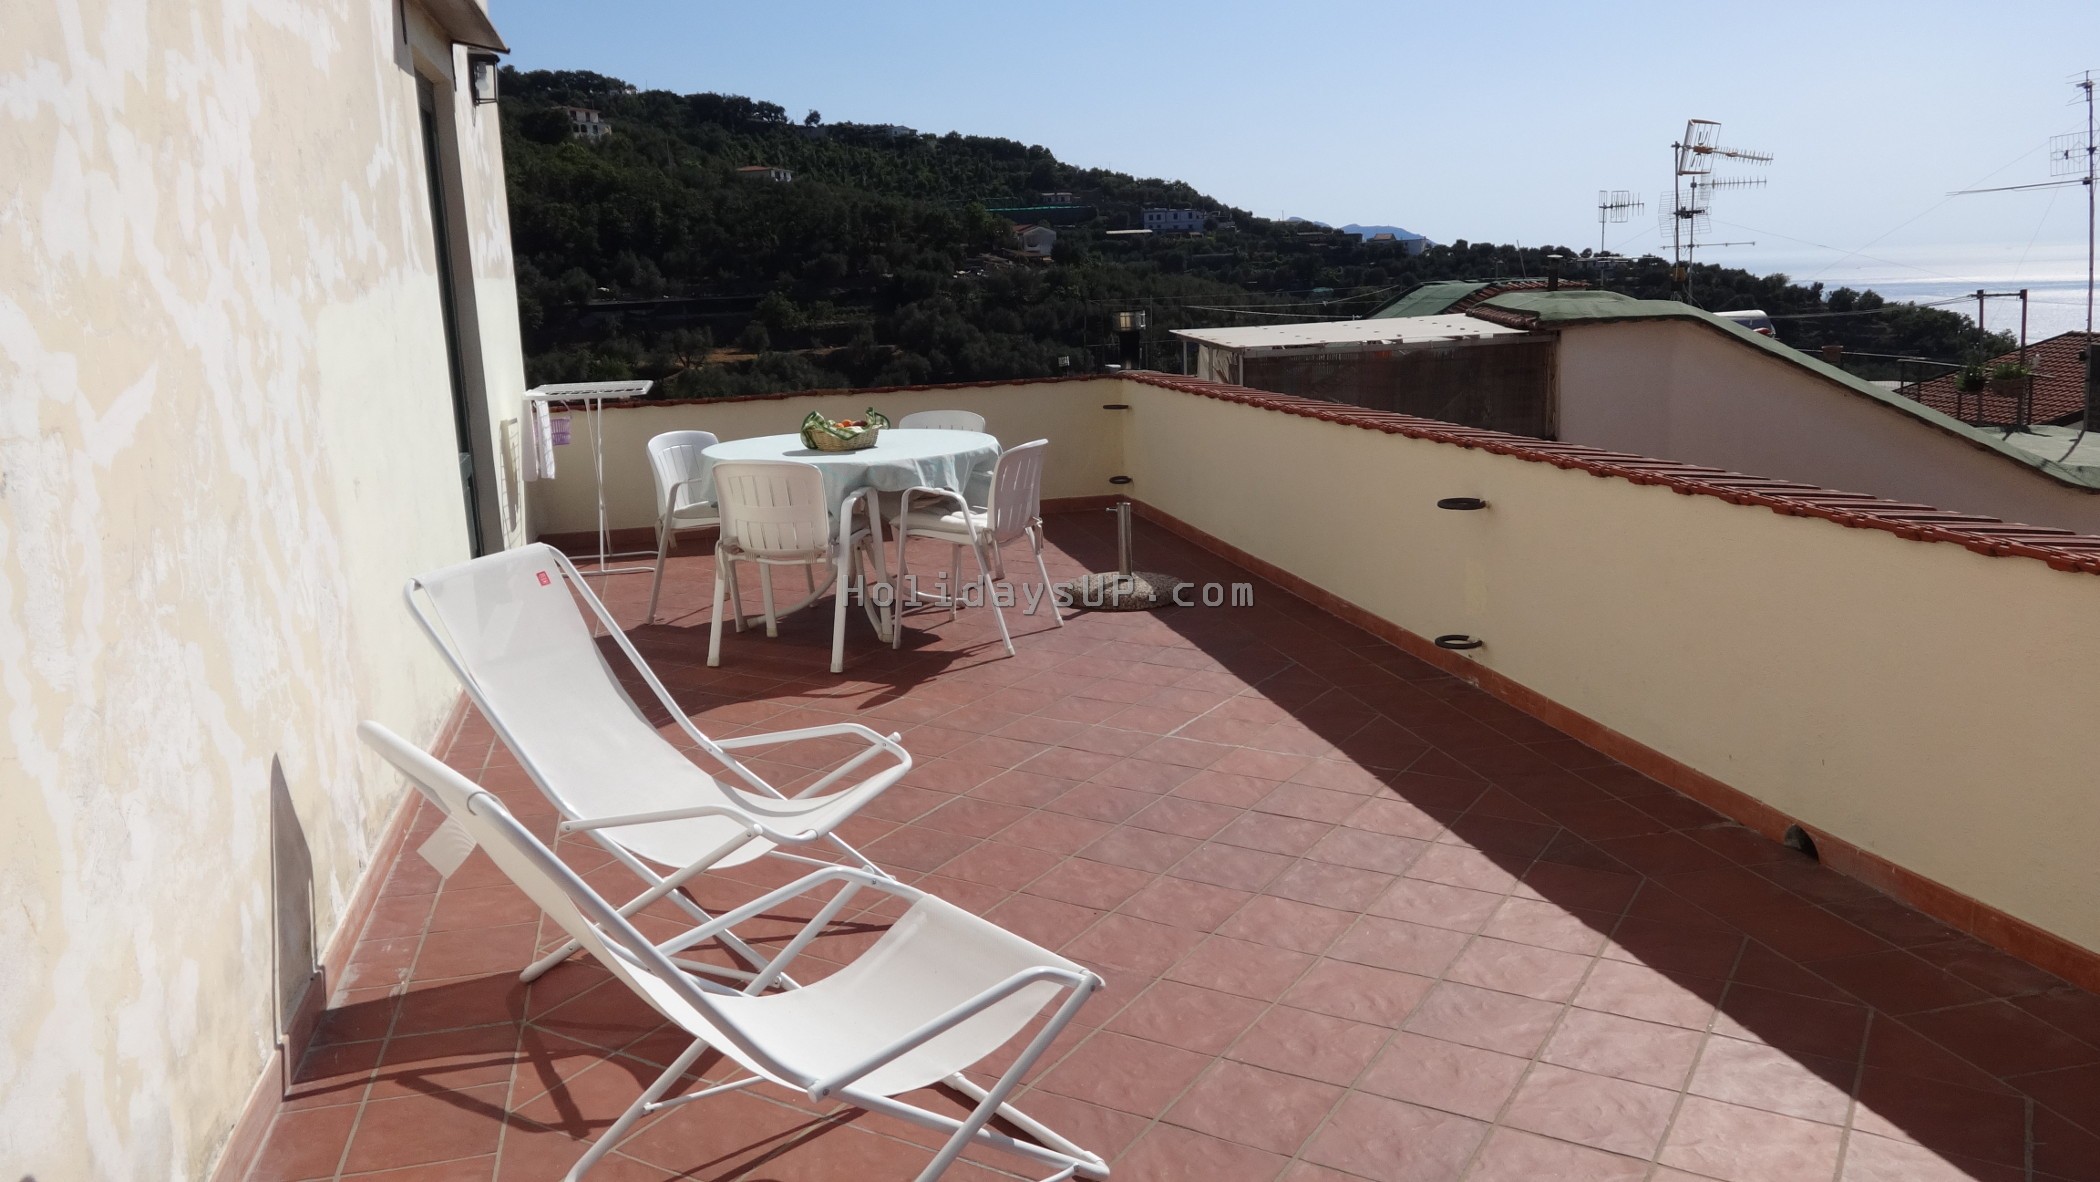 Terrace-solarium Villa holiday booking rentals Sorrento Coast